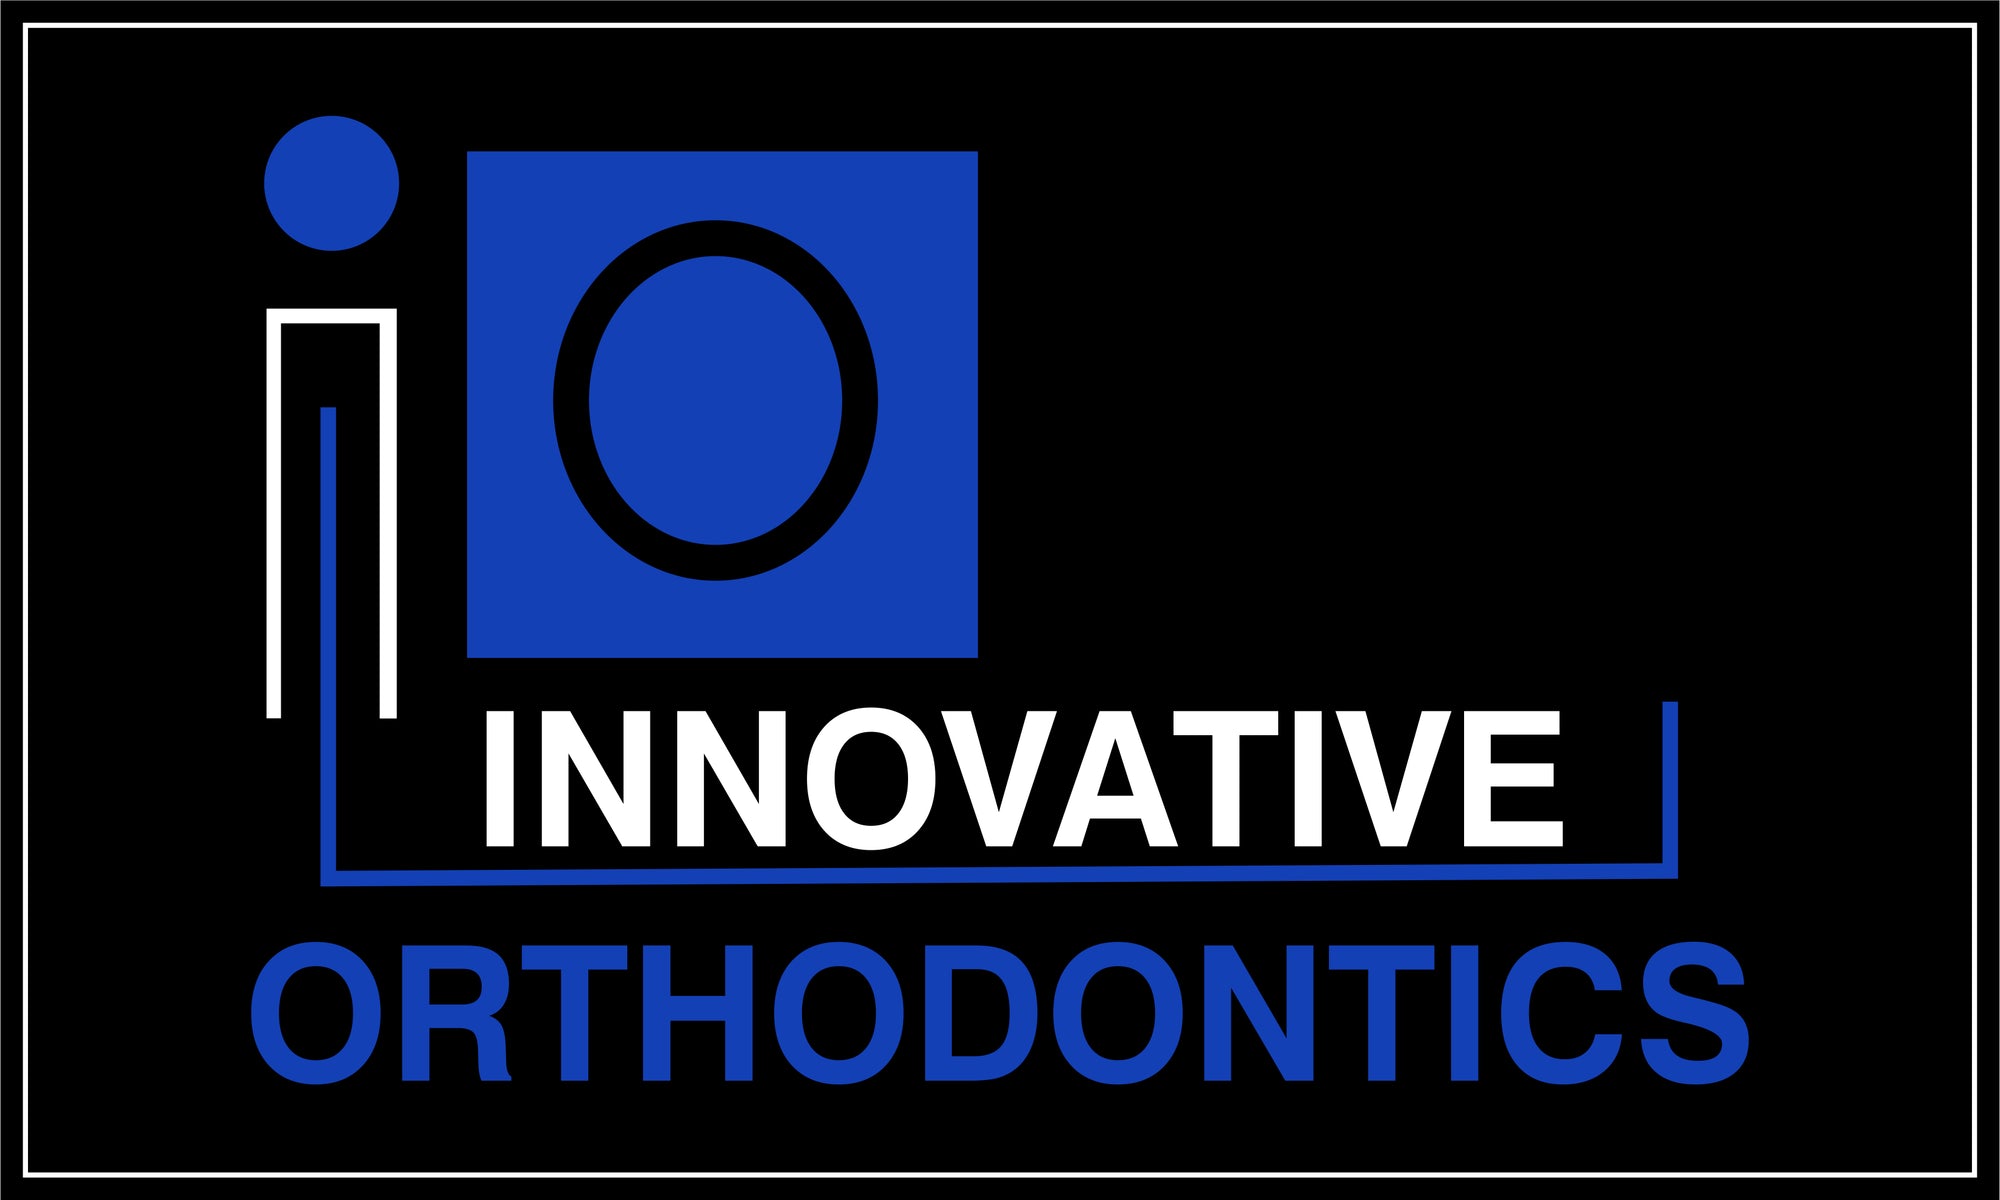 Innovative Orthodontics 6 x 10 Luxury Berber Inlay - The Personalized Doormats Company